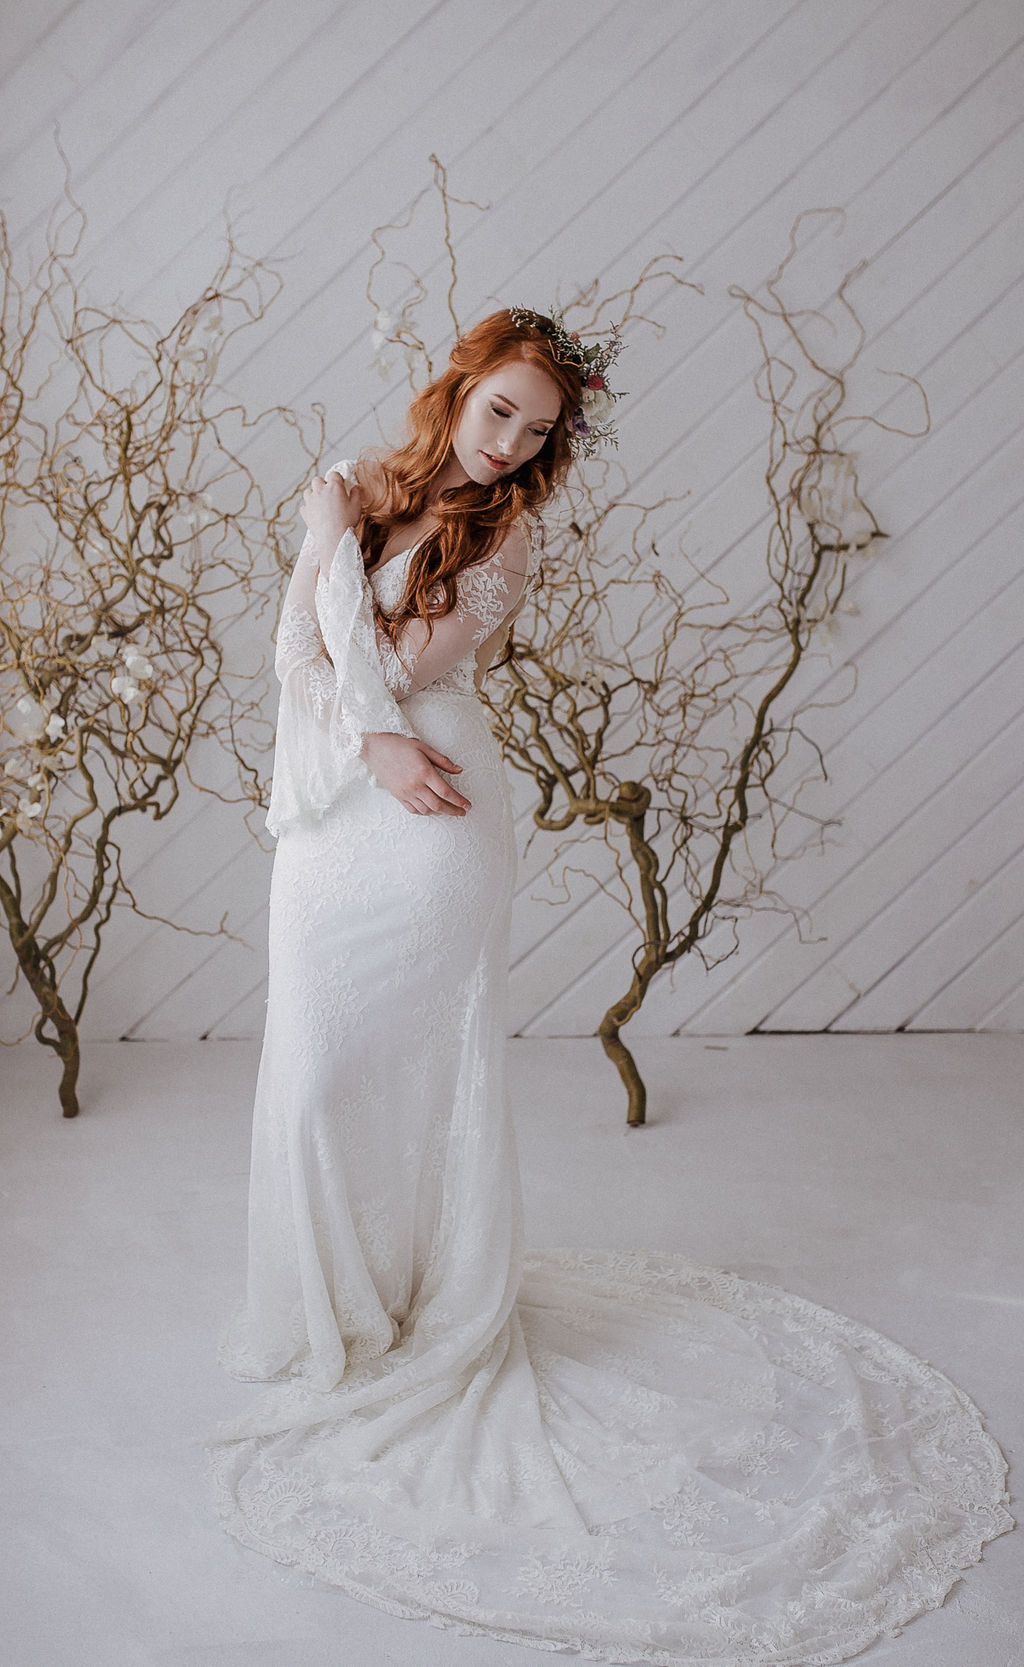 redhead beautiful spokane bride